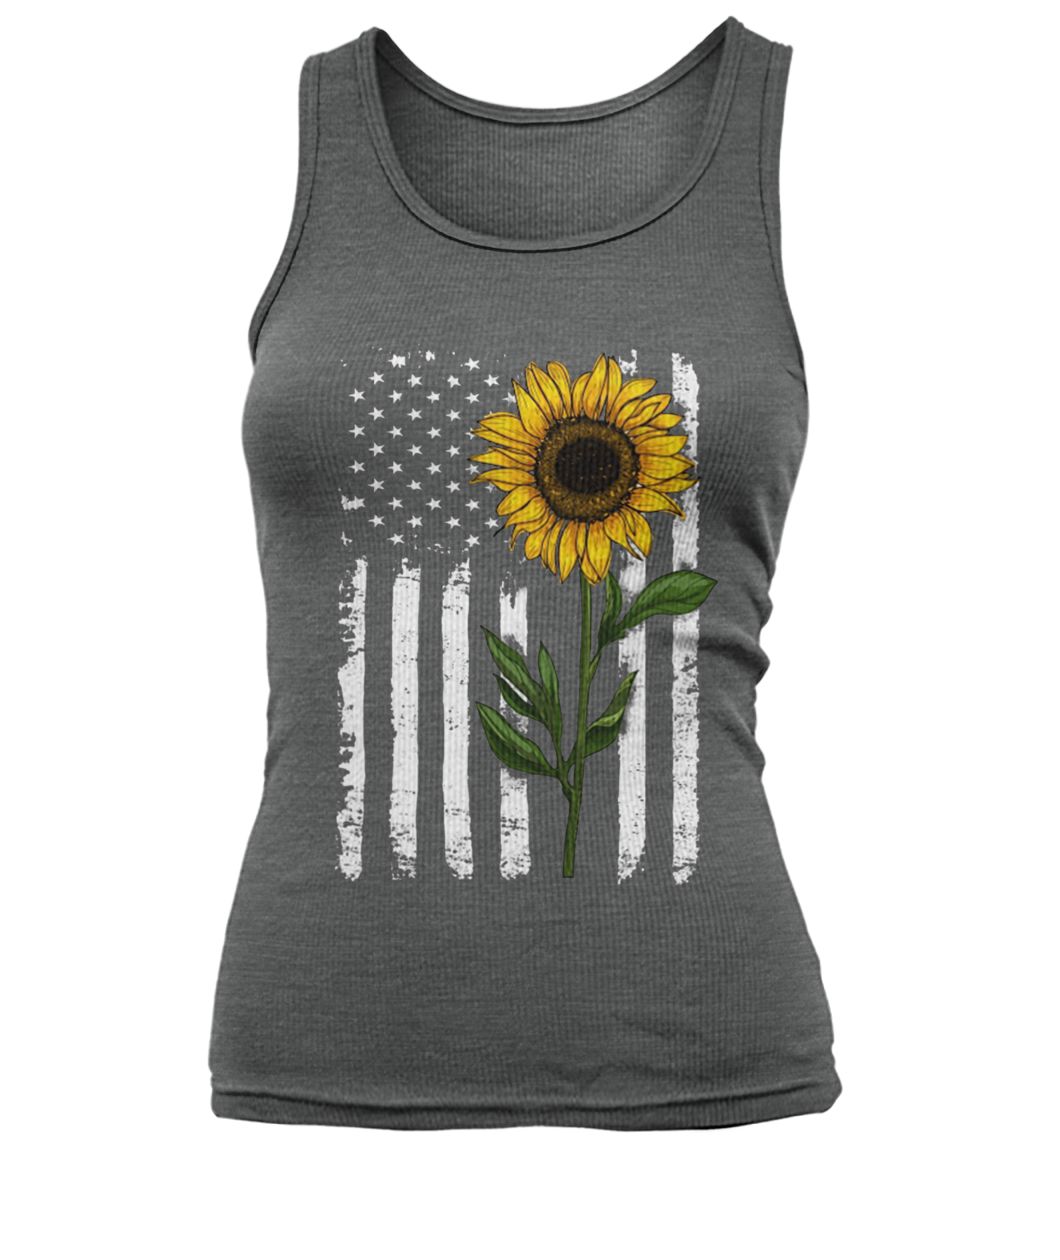 American flag sunflower hippie distressed women's tank top